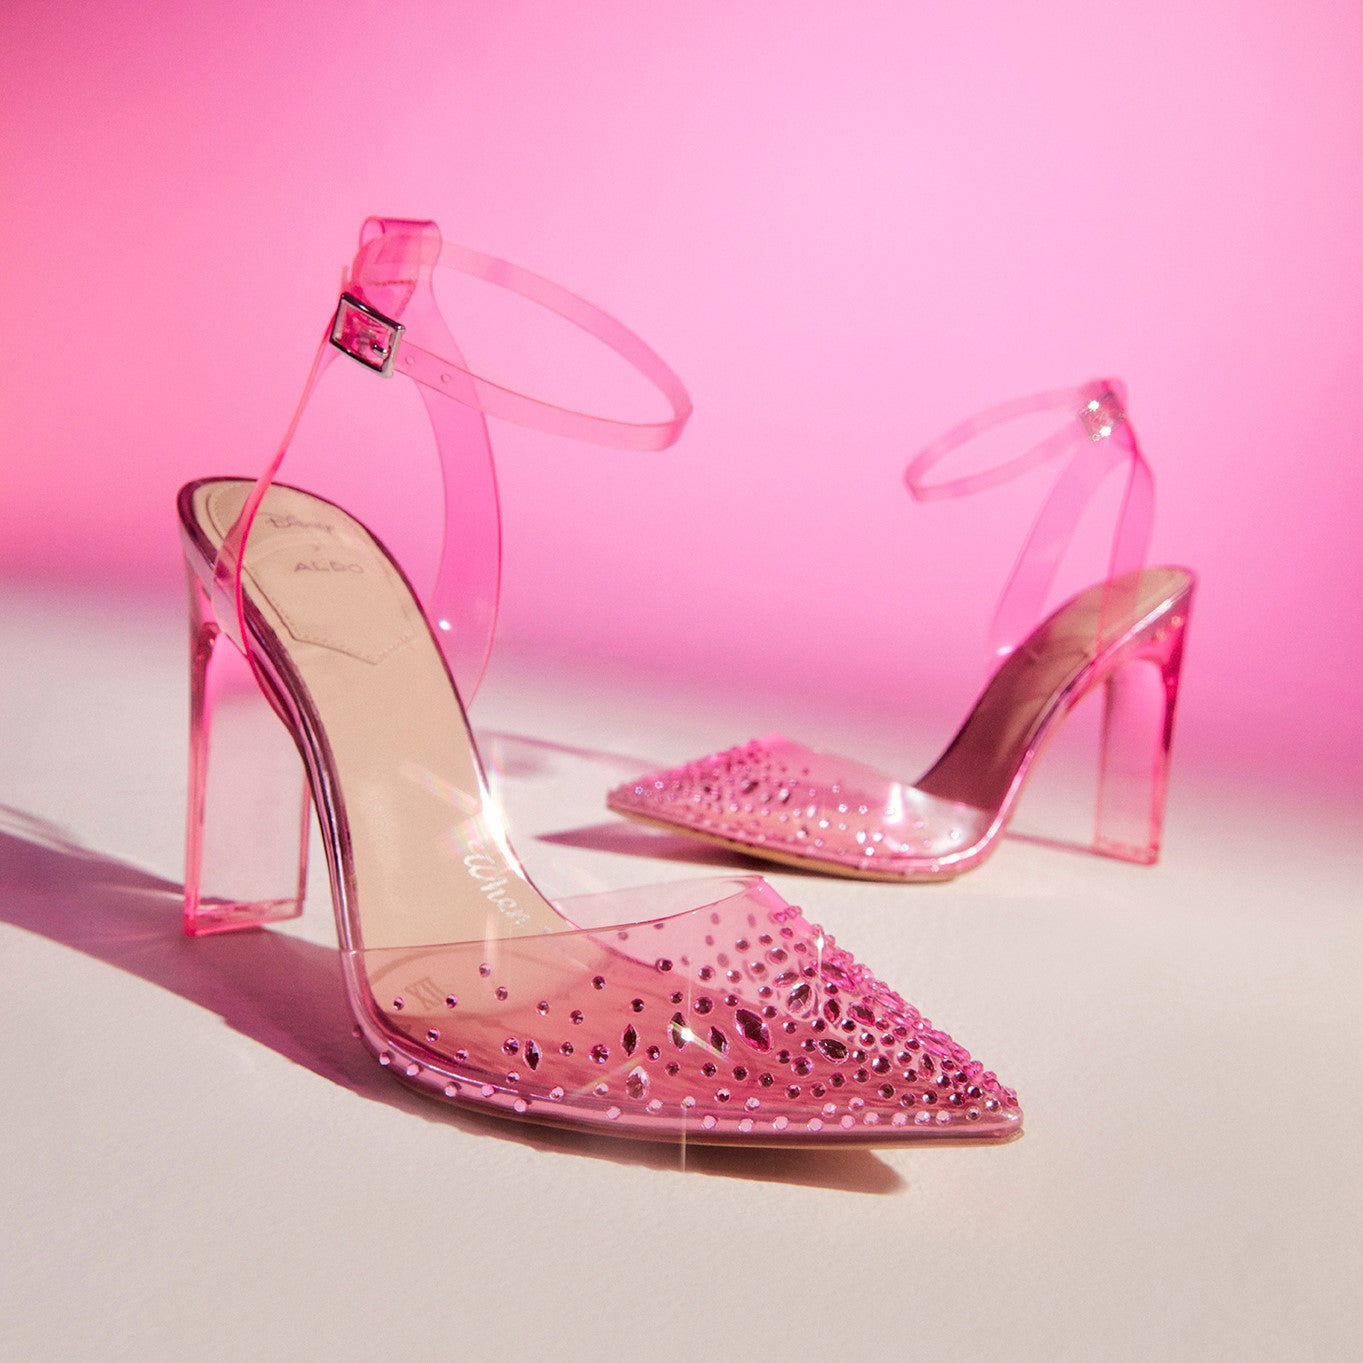 Aldo Disney Women's Pillow Walk Comfortable Heeled Shoes (Light Pink) – ALDO Shoes UK